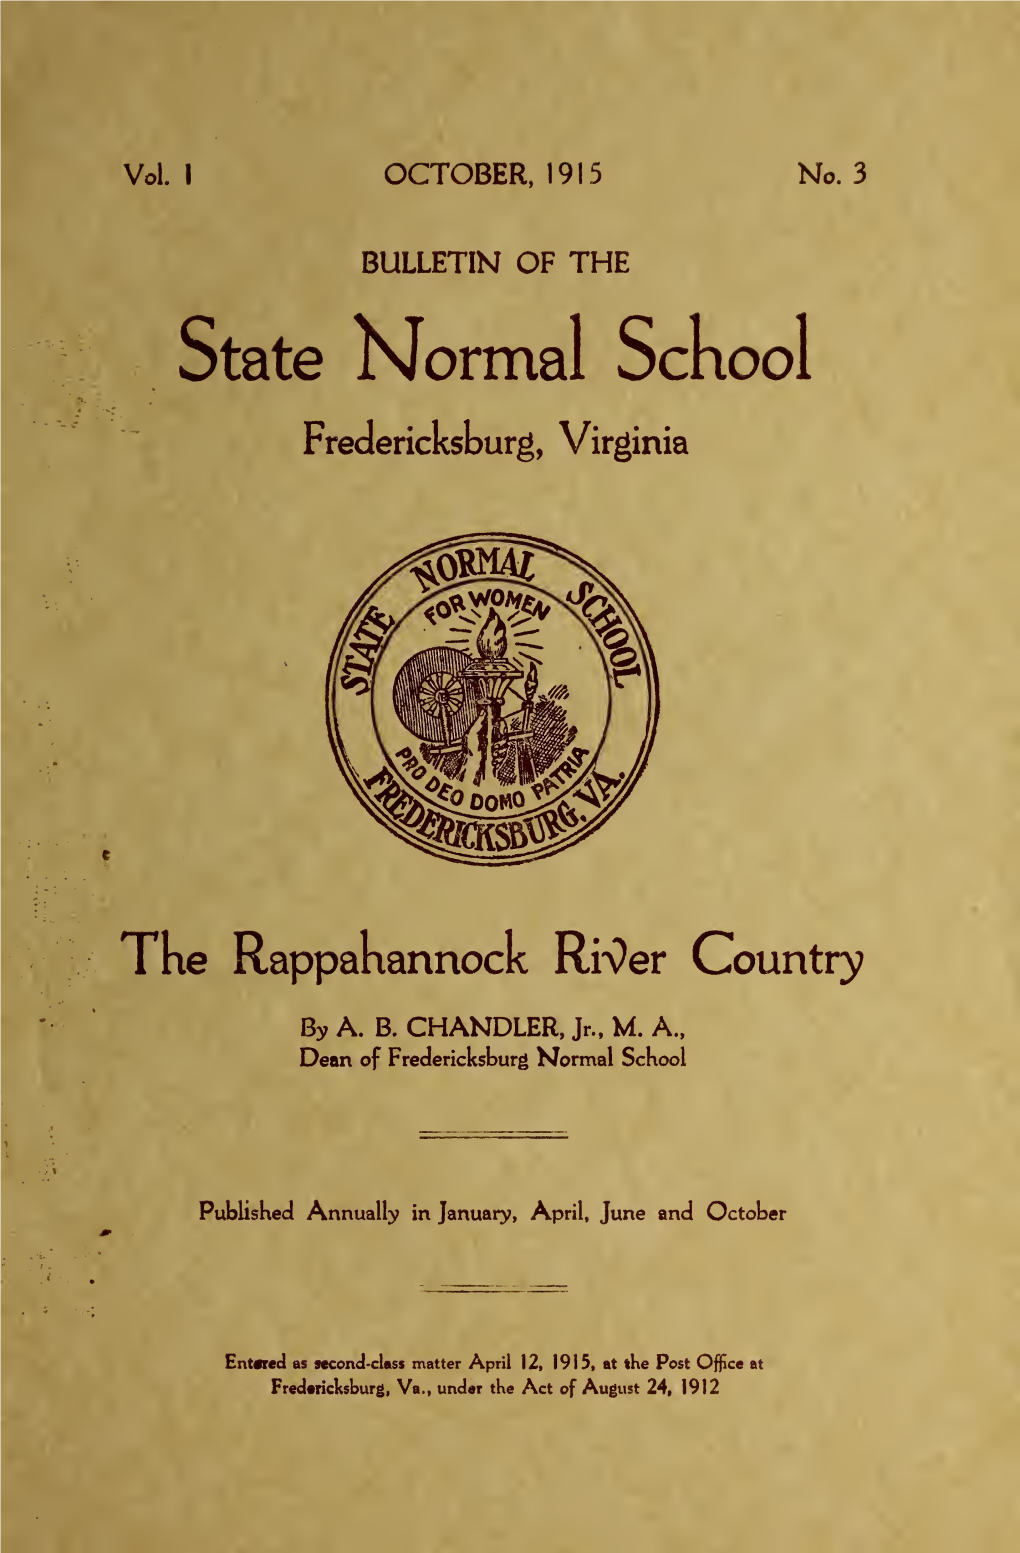 Bulletin of the State Normal School, Fredericksburg, Virginia, October